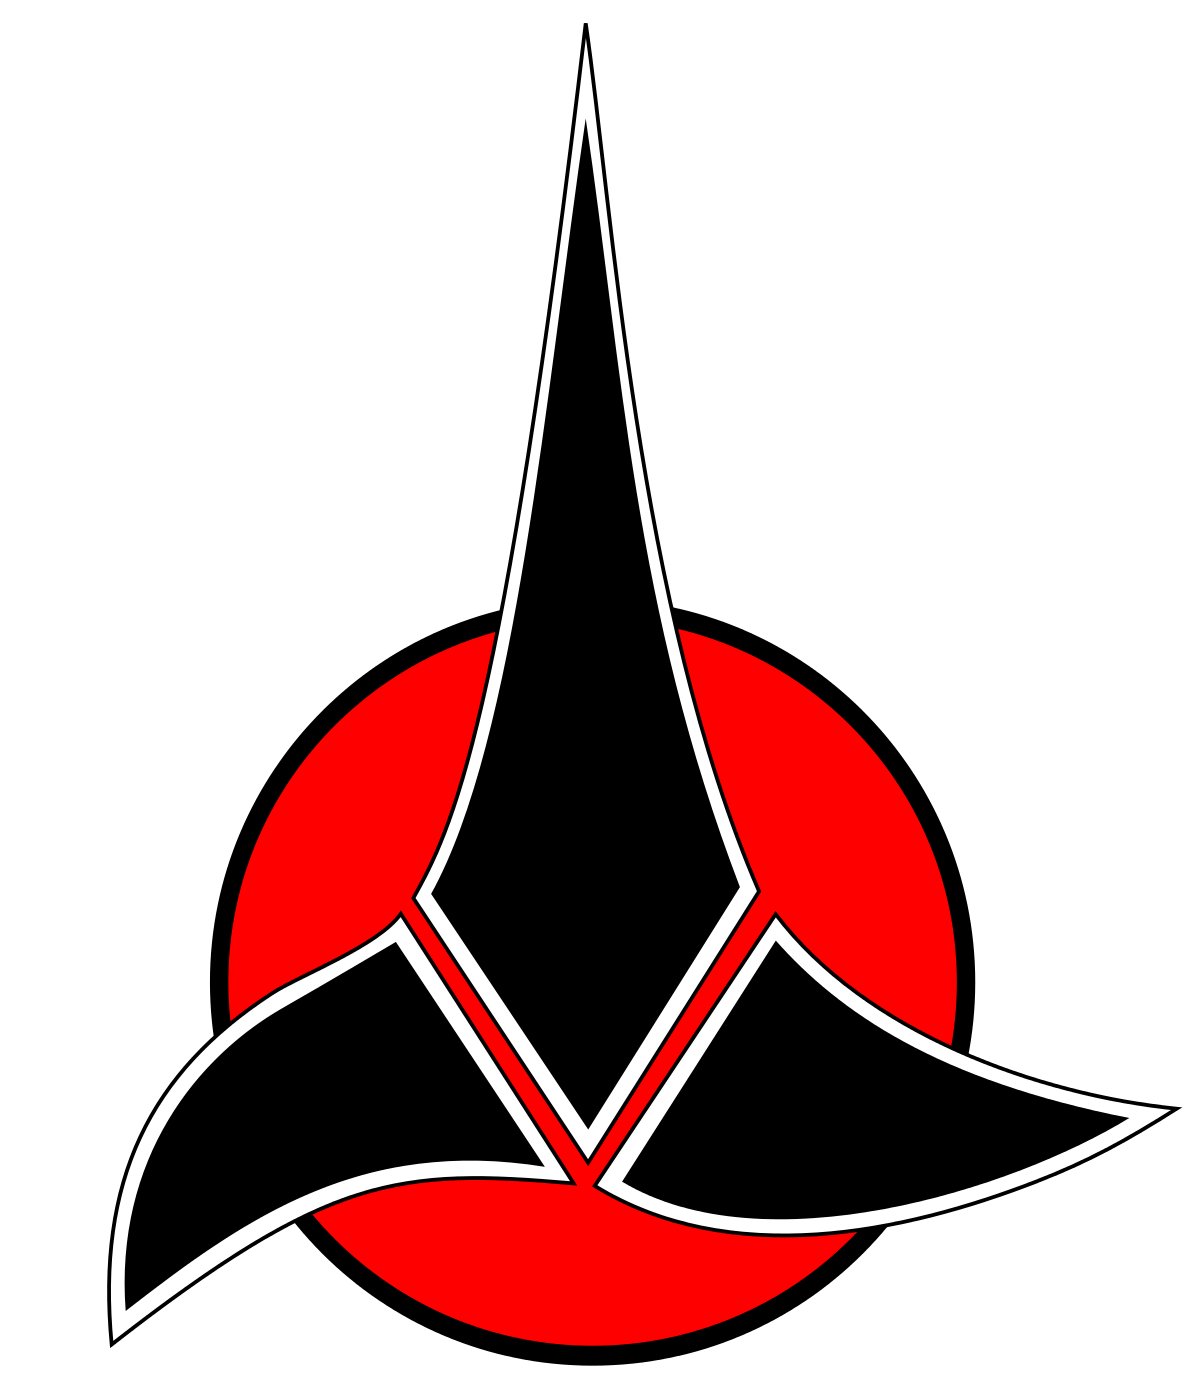 red star trek symbol